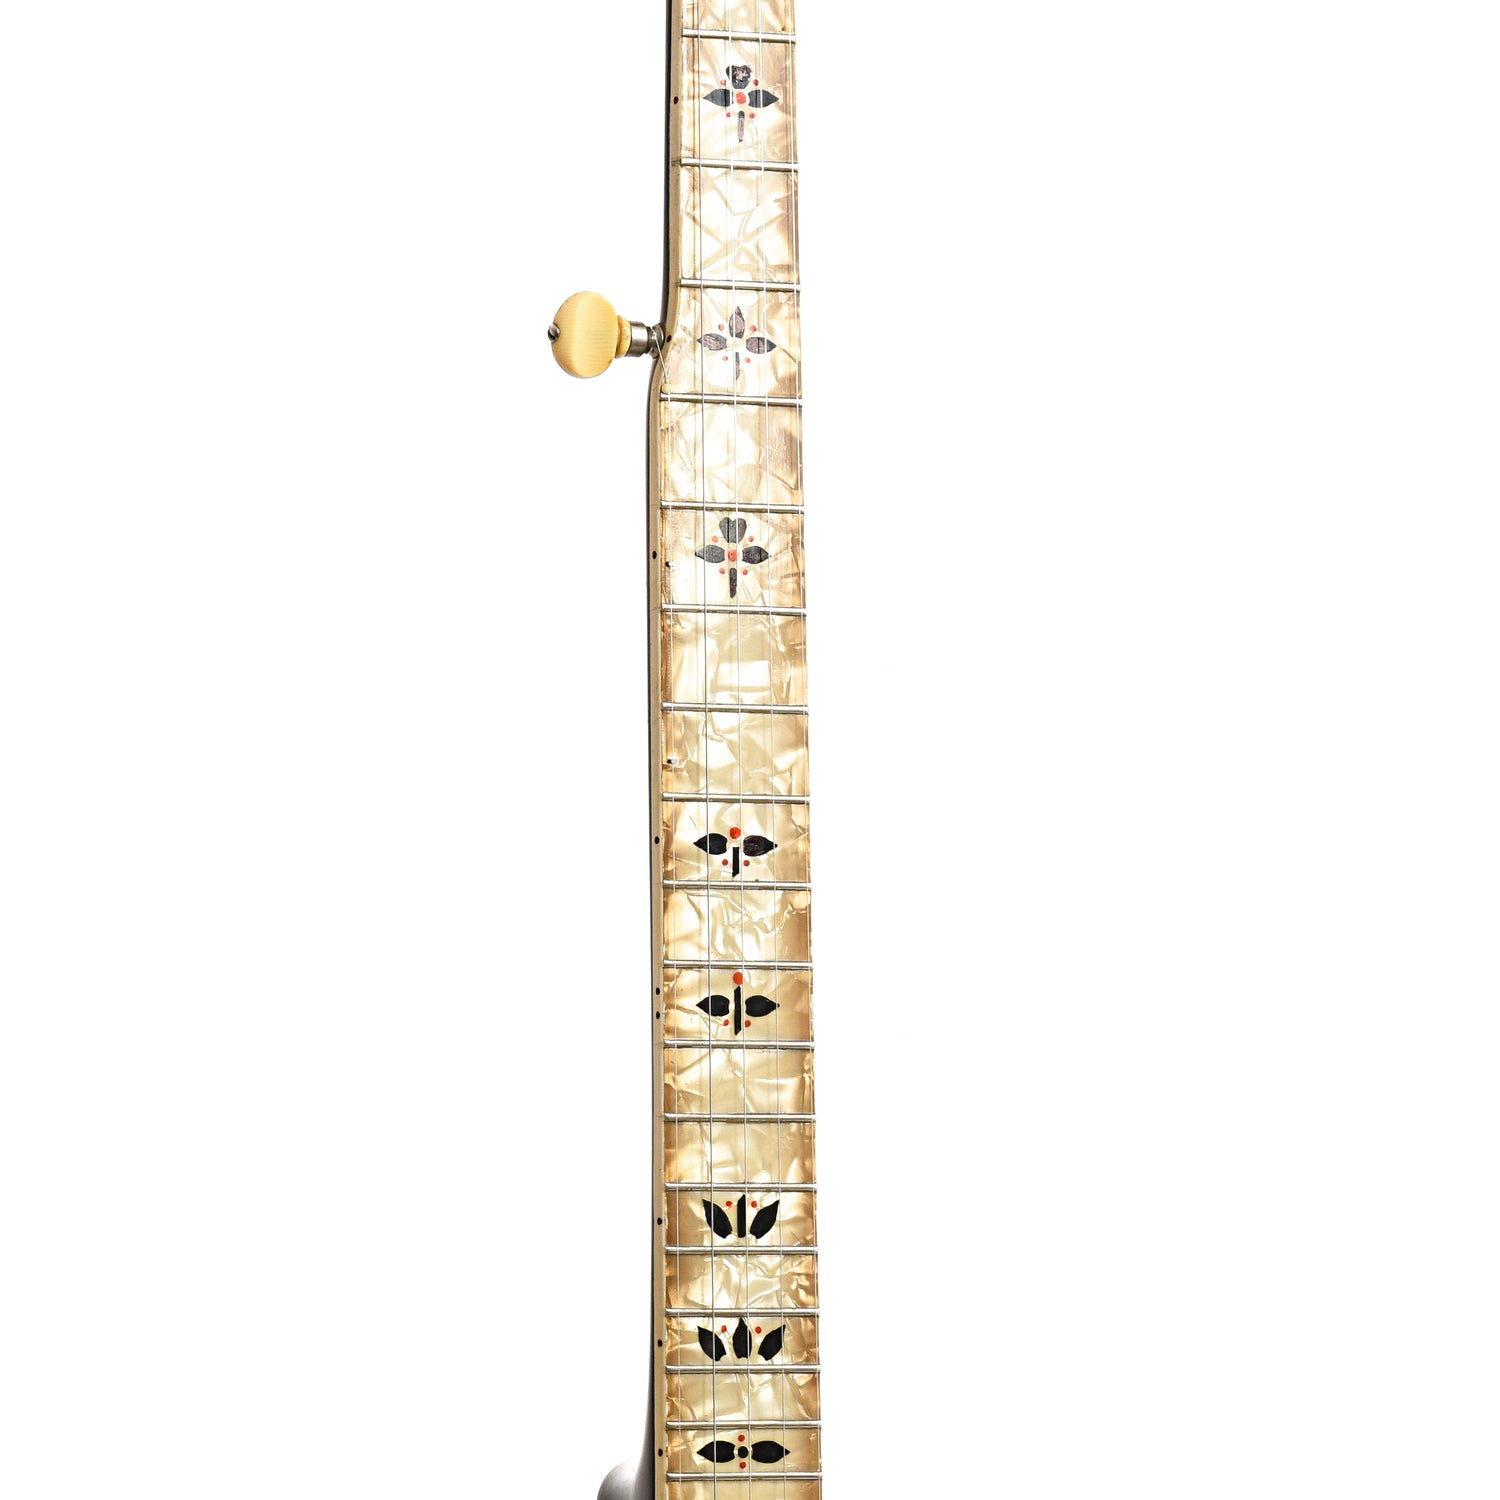 Image 7 of Gibson TB-11 Conversion (1930s) - SKU# 70U-210190 : Product Type Resonator Back Banjos : Elderly Instruments